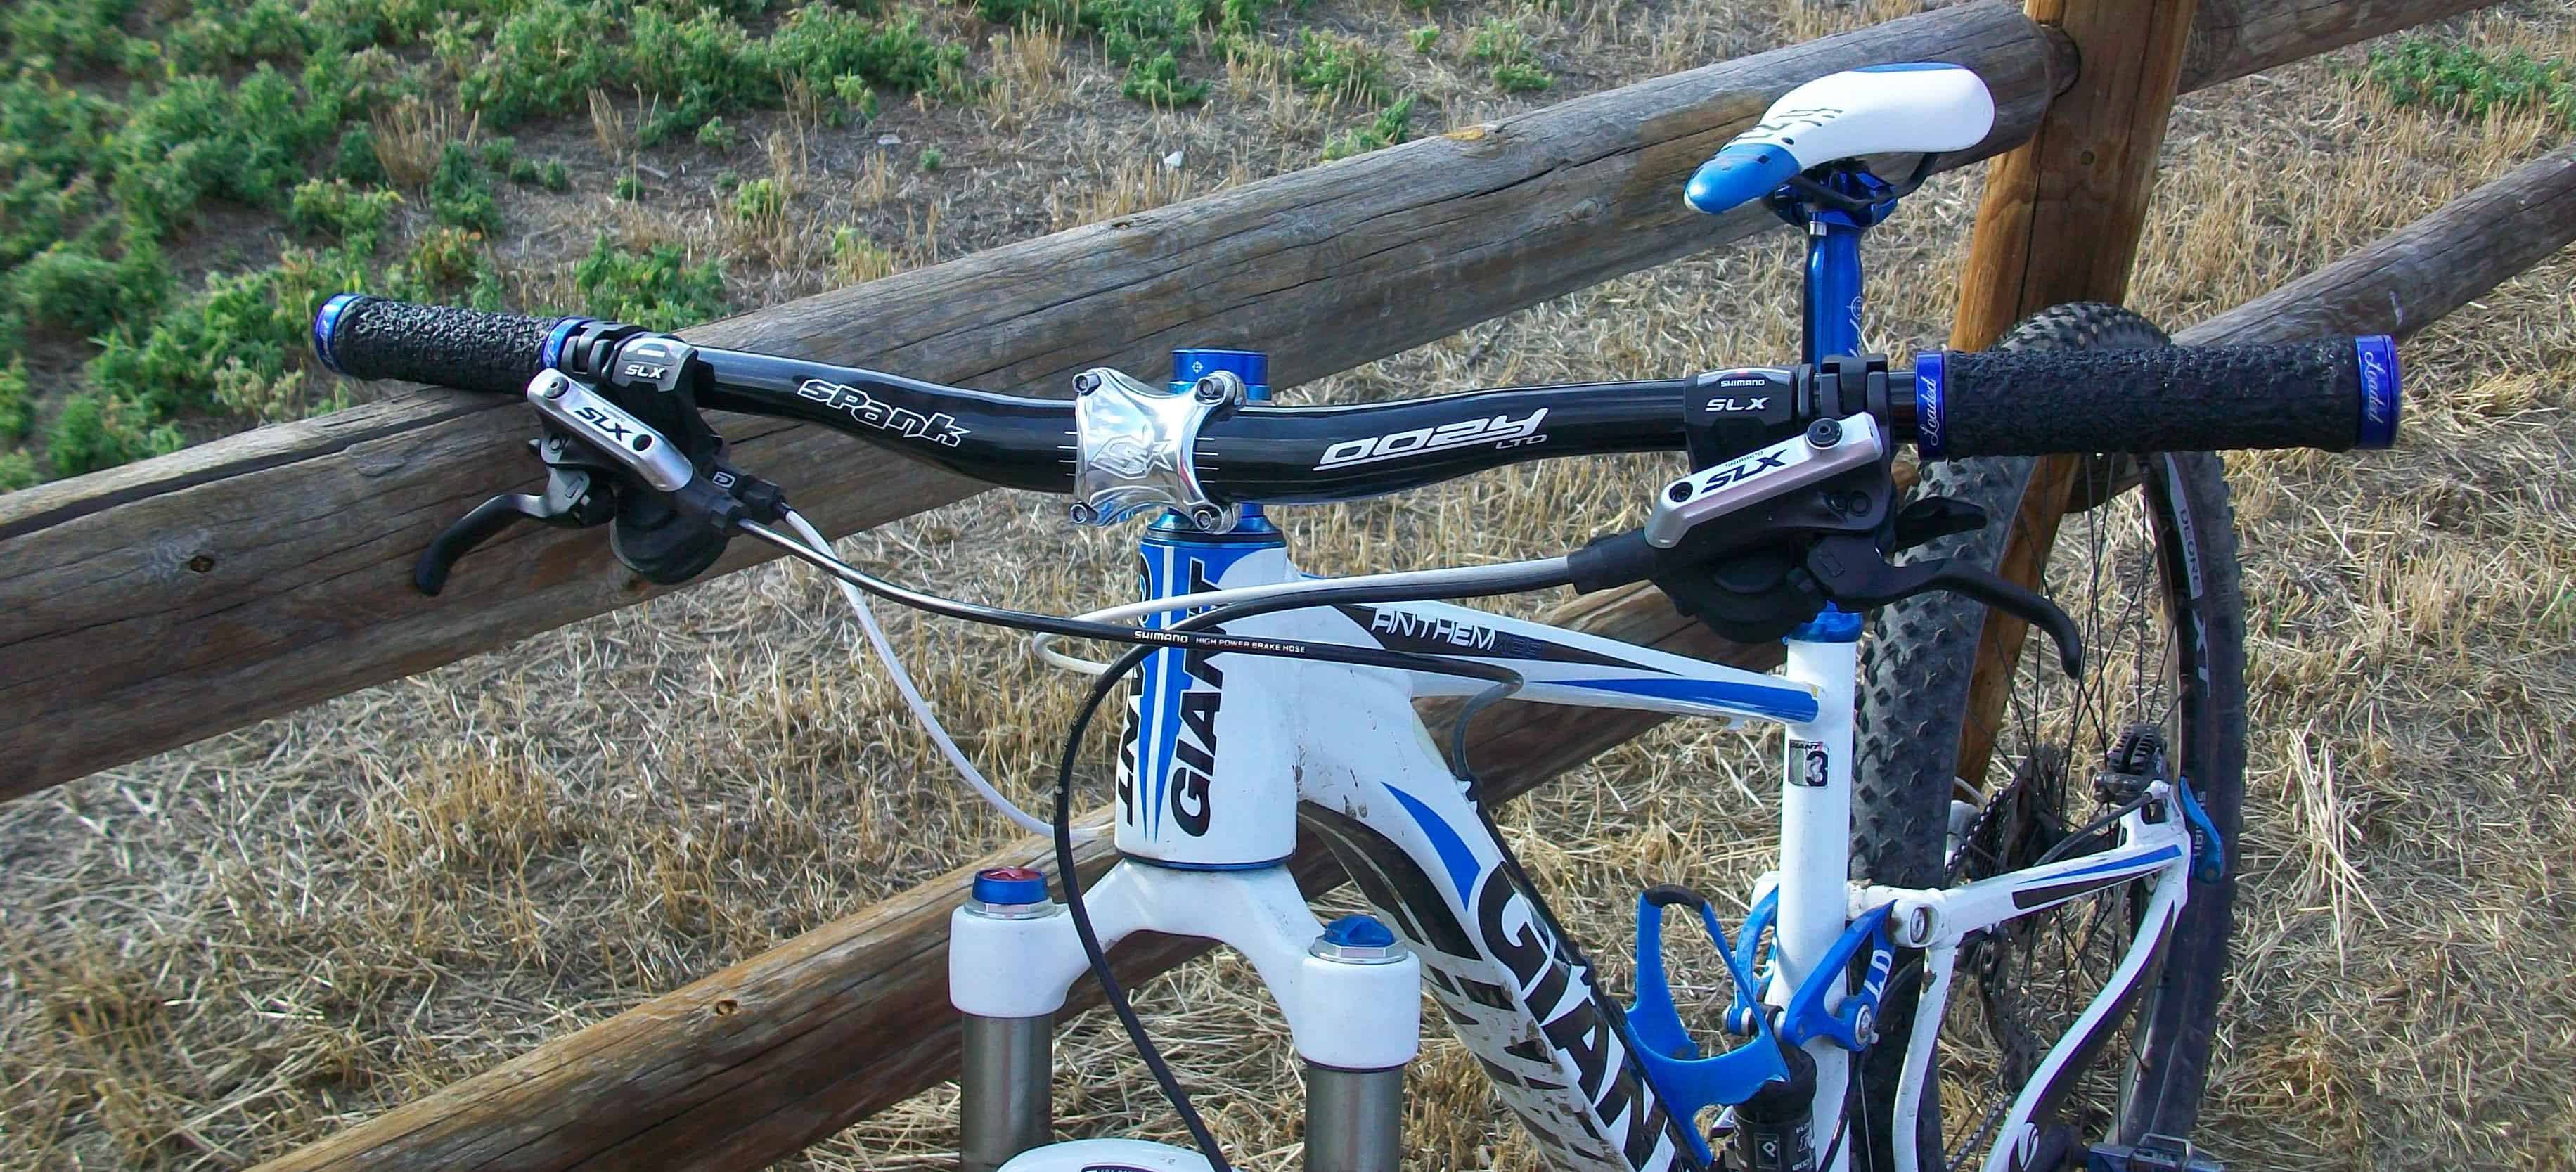 Flat Handlebars - choosing hybrid bicycle